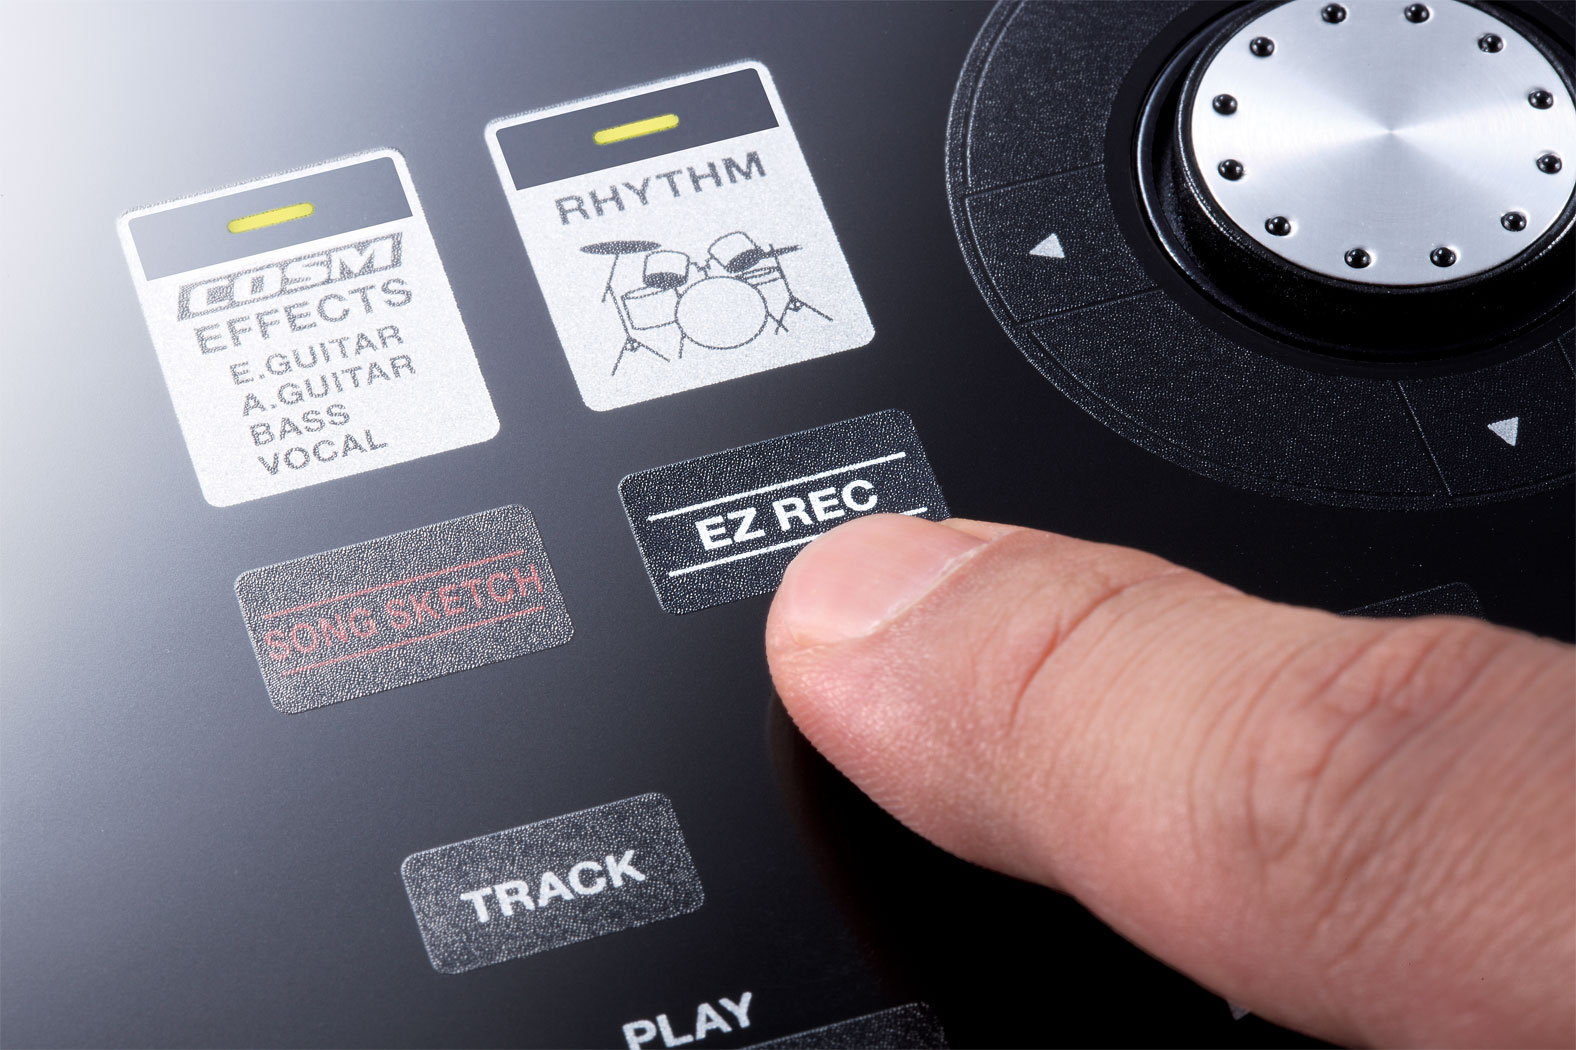 картинка Boss BR-800 Digital Recorder от магазина Multimusic